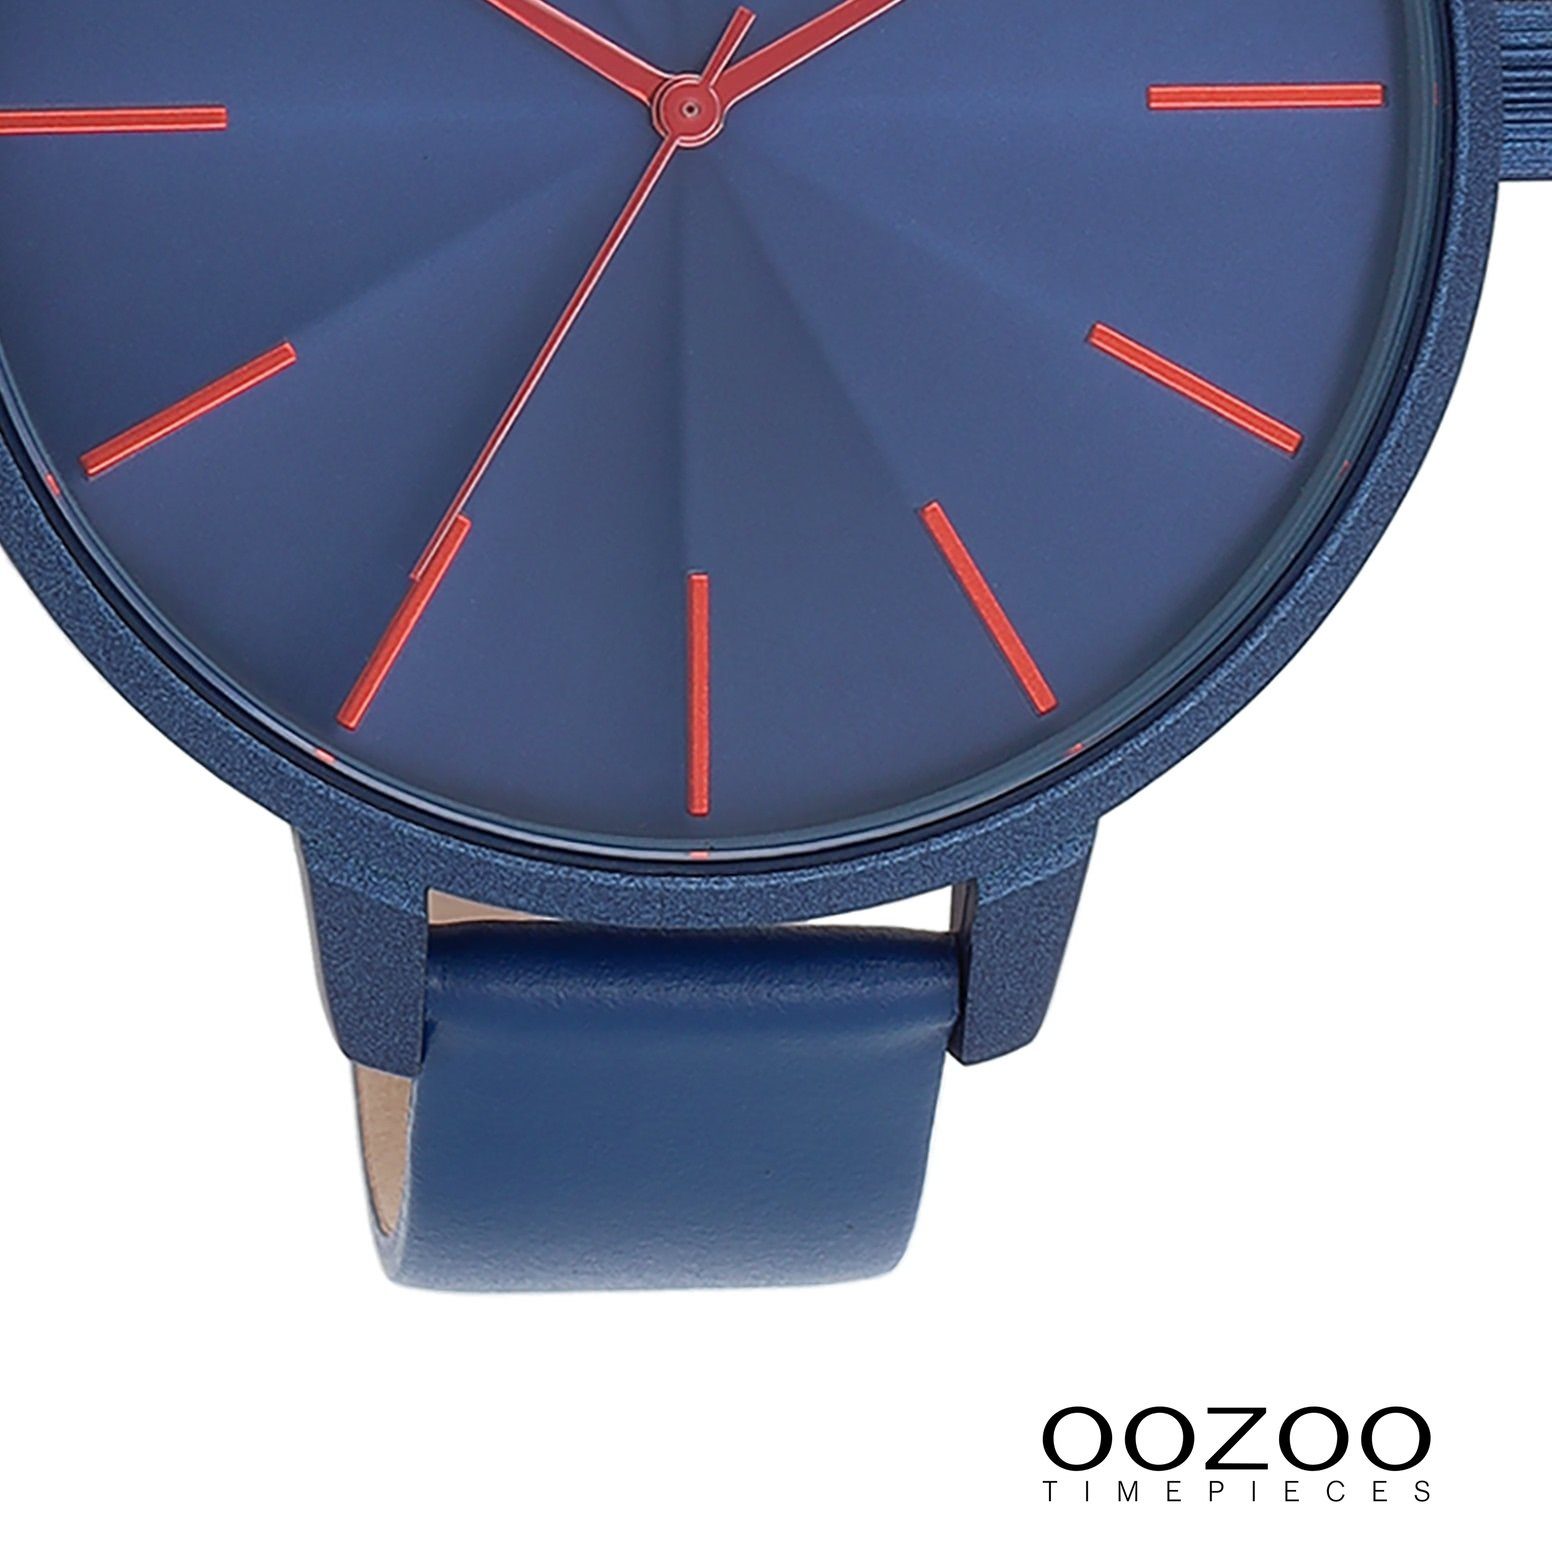 (ca. extra Armbanduhr Damen Lederarmband, Oozoo OOZOO rund, Timepieces Damenuhr Analog, Quarzuhr Fashion-Style groß 48mm)